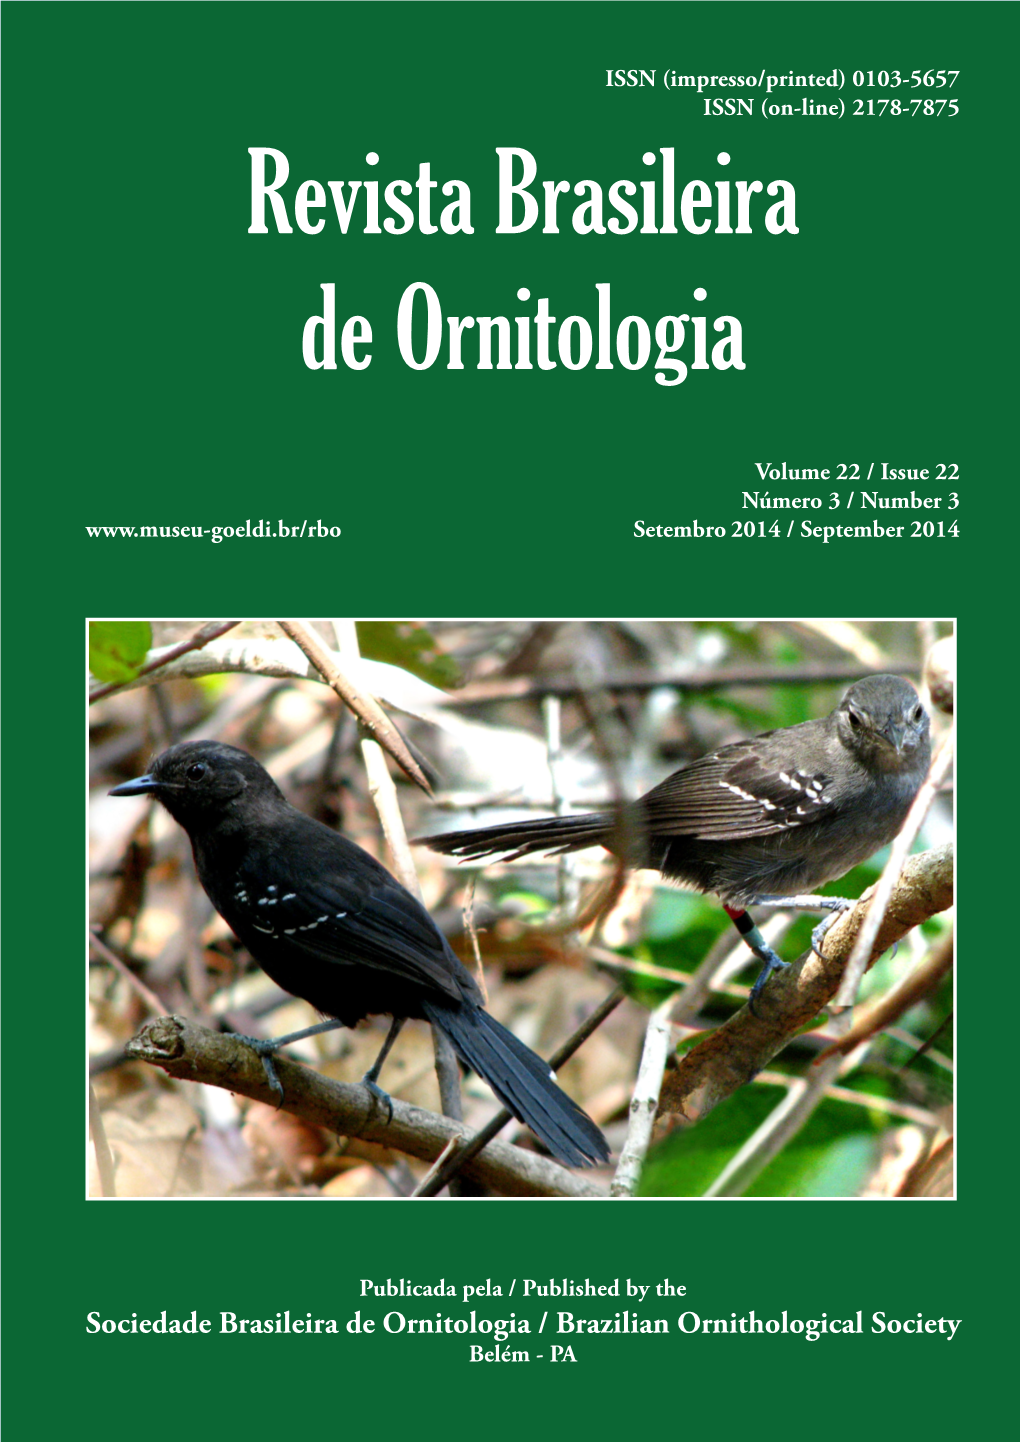 Aves: Accipitridae) in Venezuela